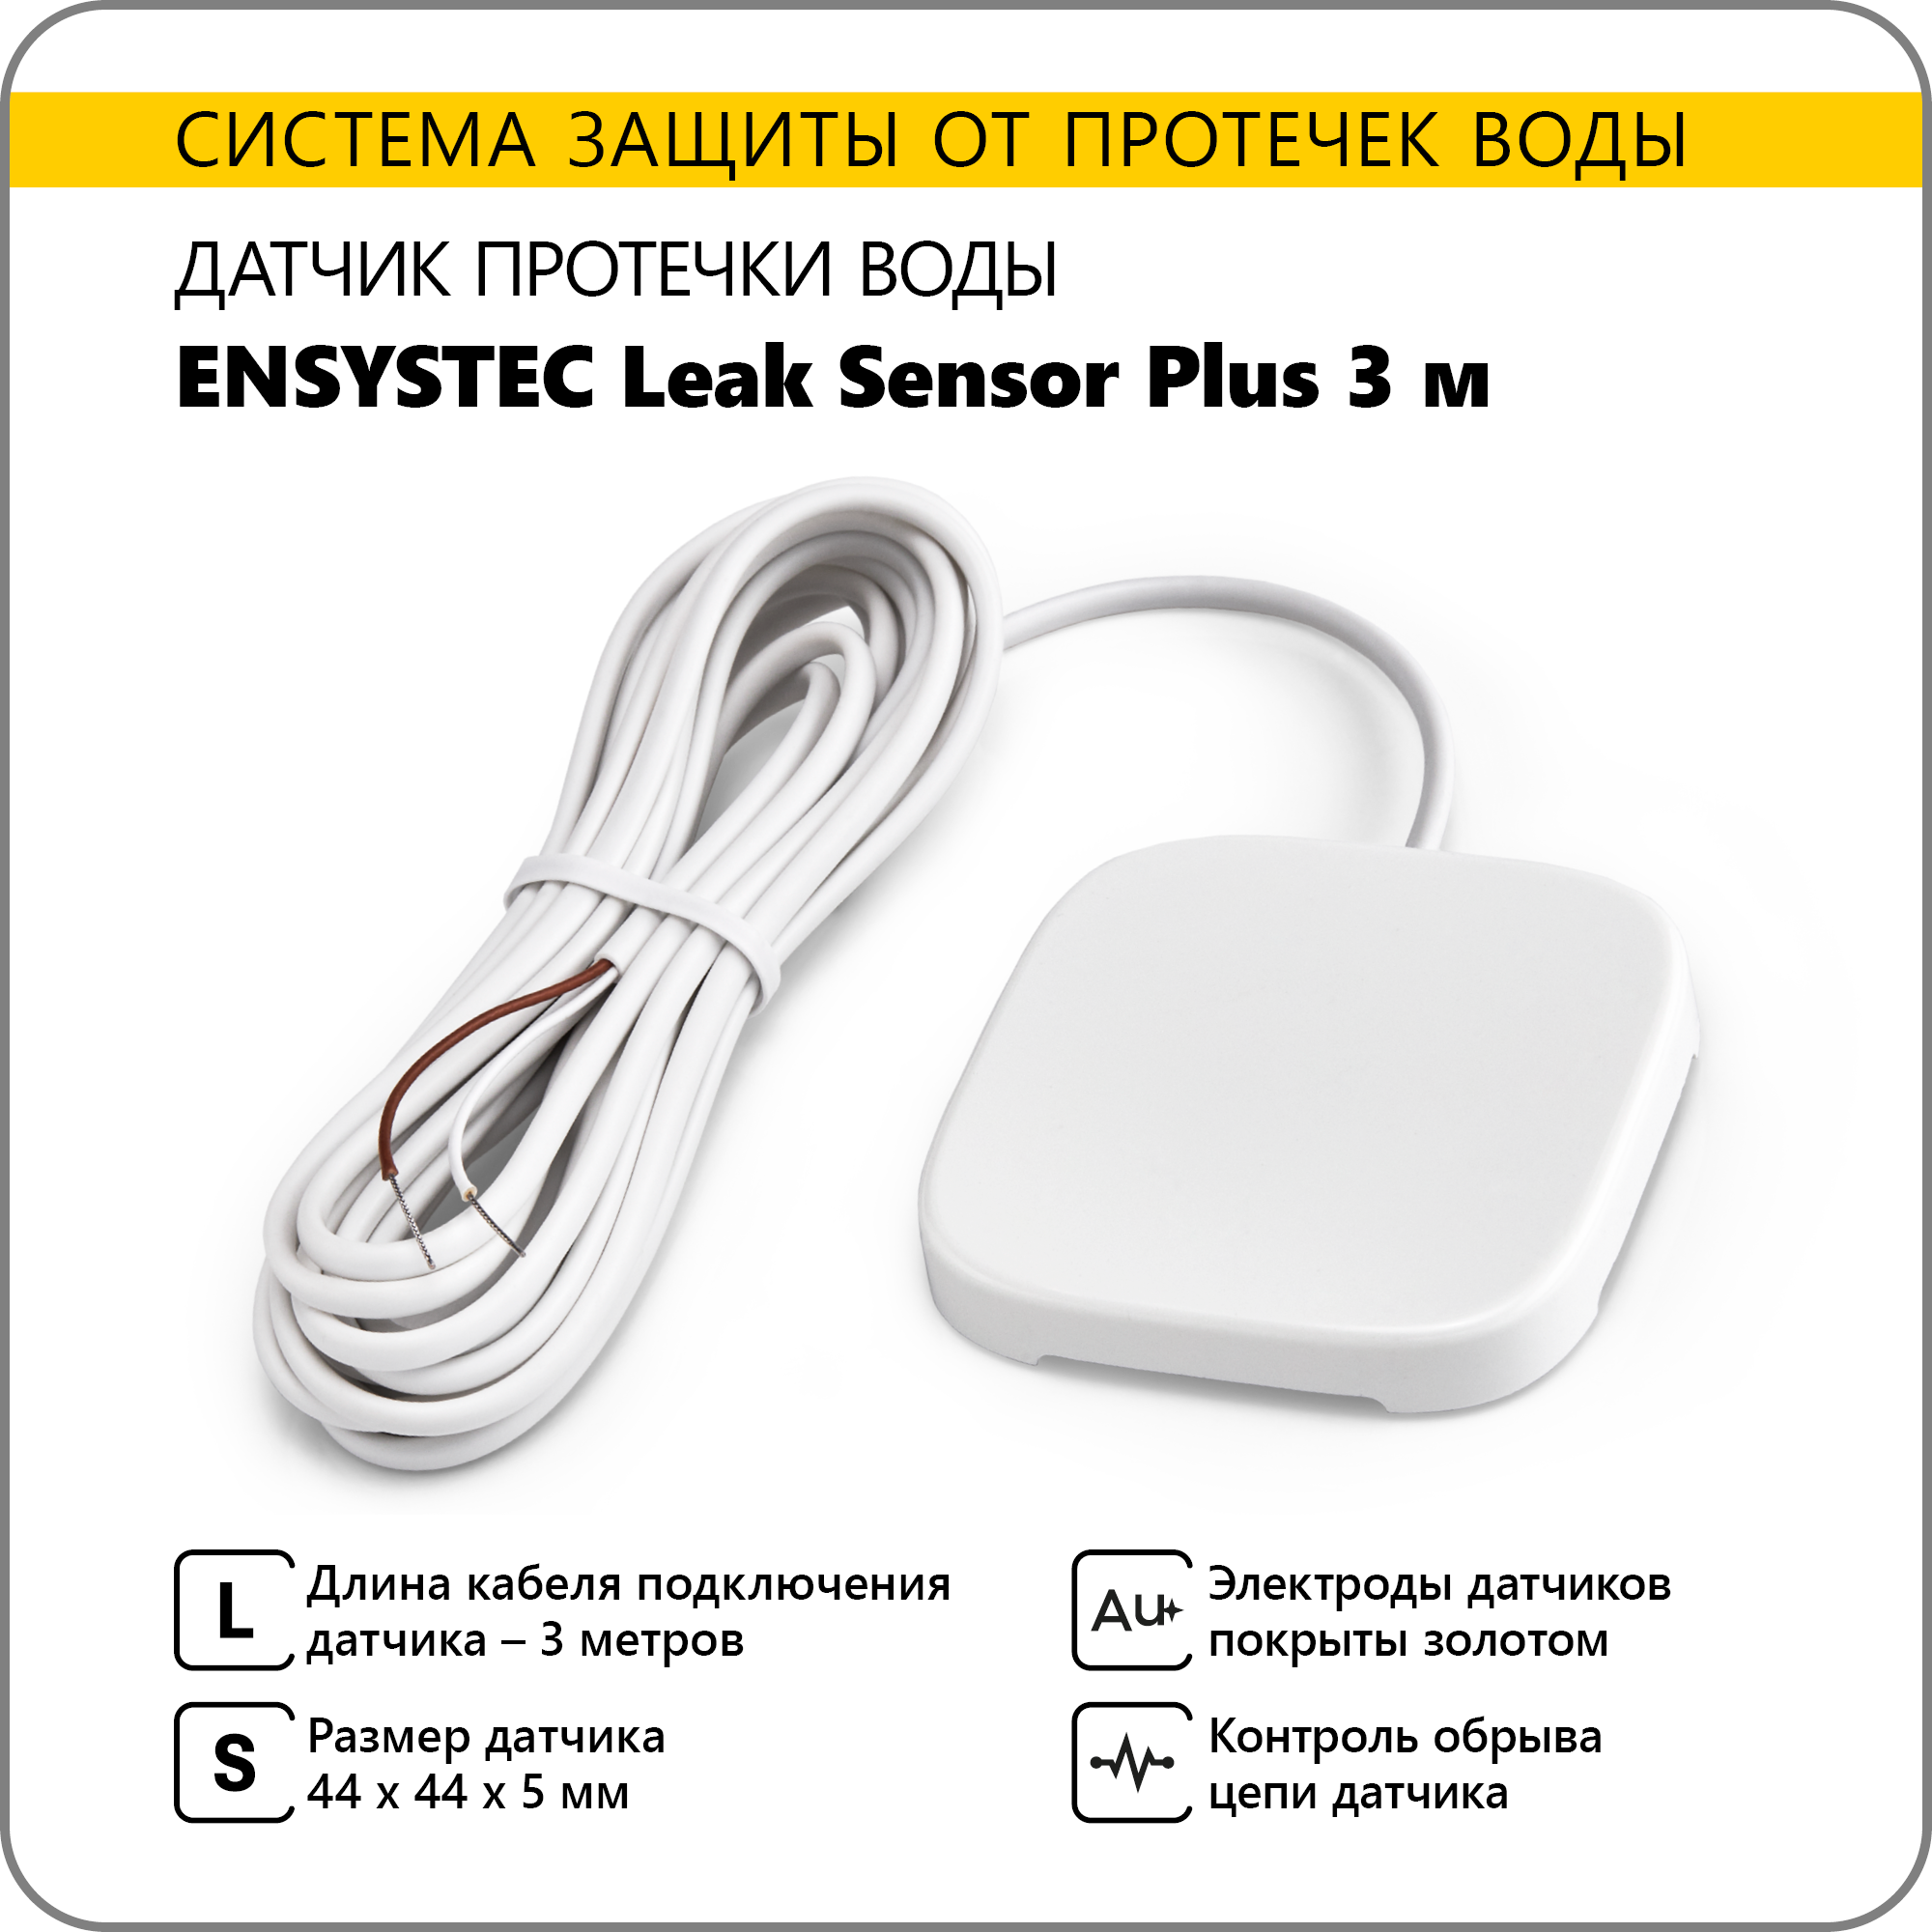 Датчик протечки воды Ensystec Leak Sensor Plus 5 м